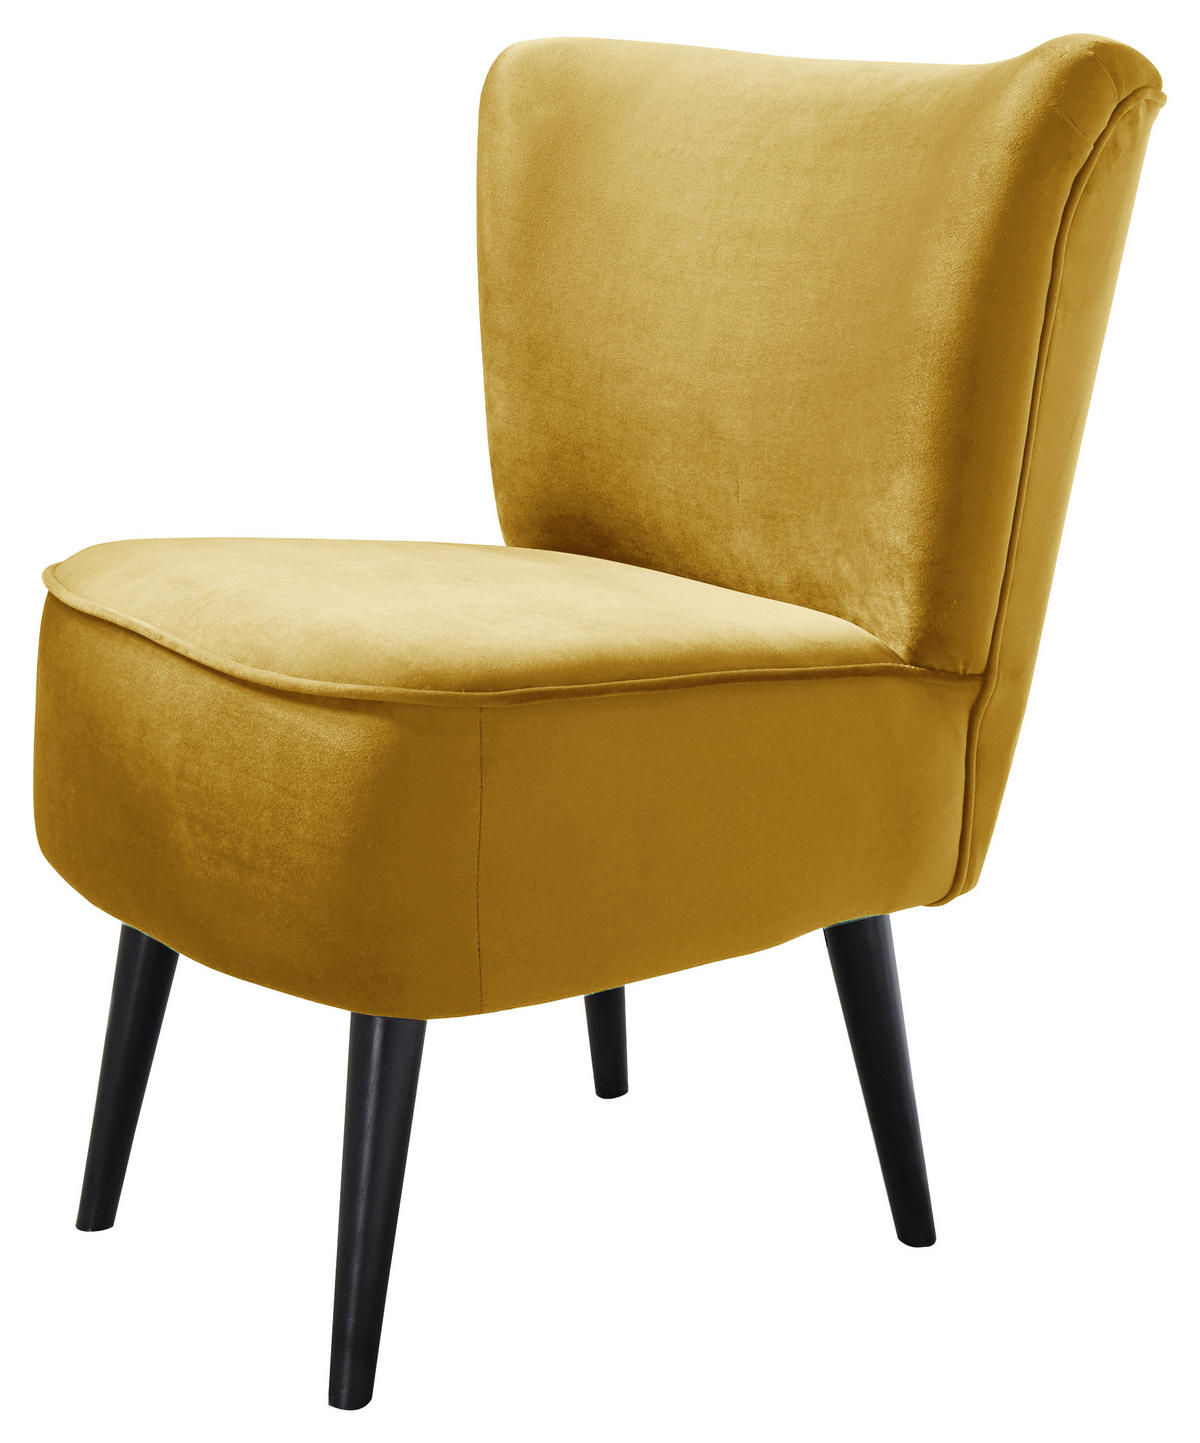 Retro-Looks in Sessel shoppen Moderne Goldfarben: